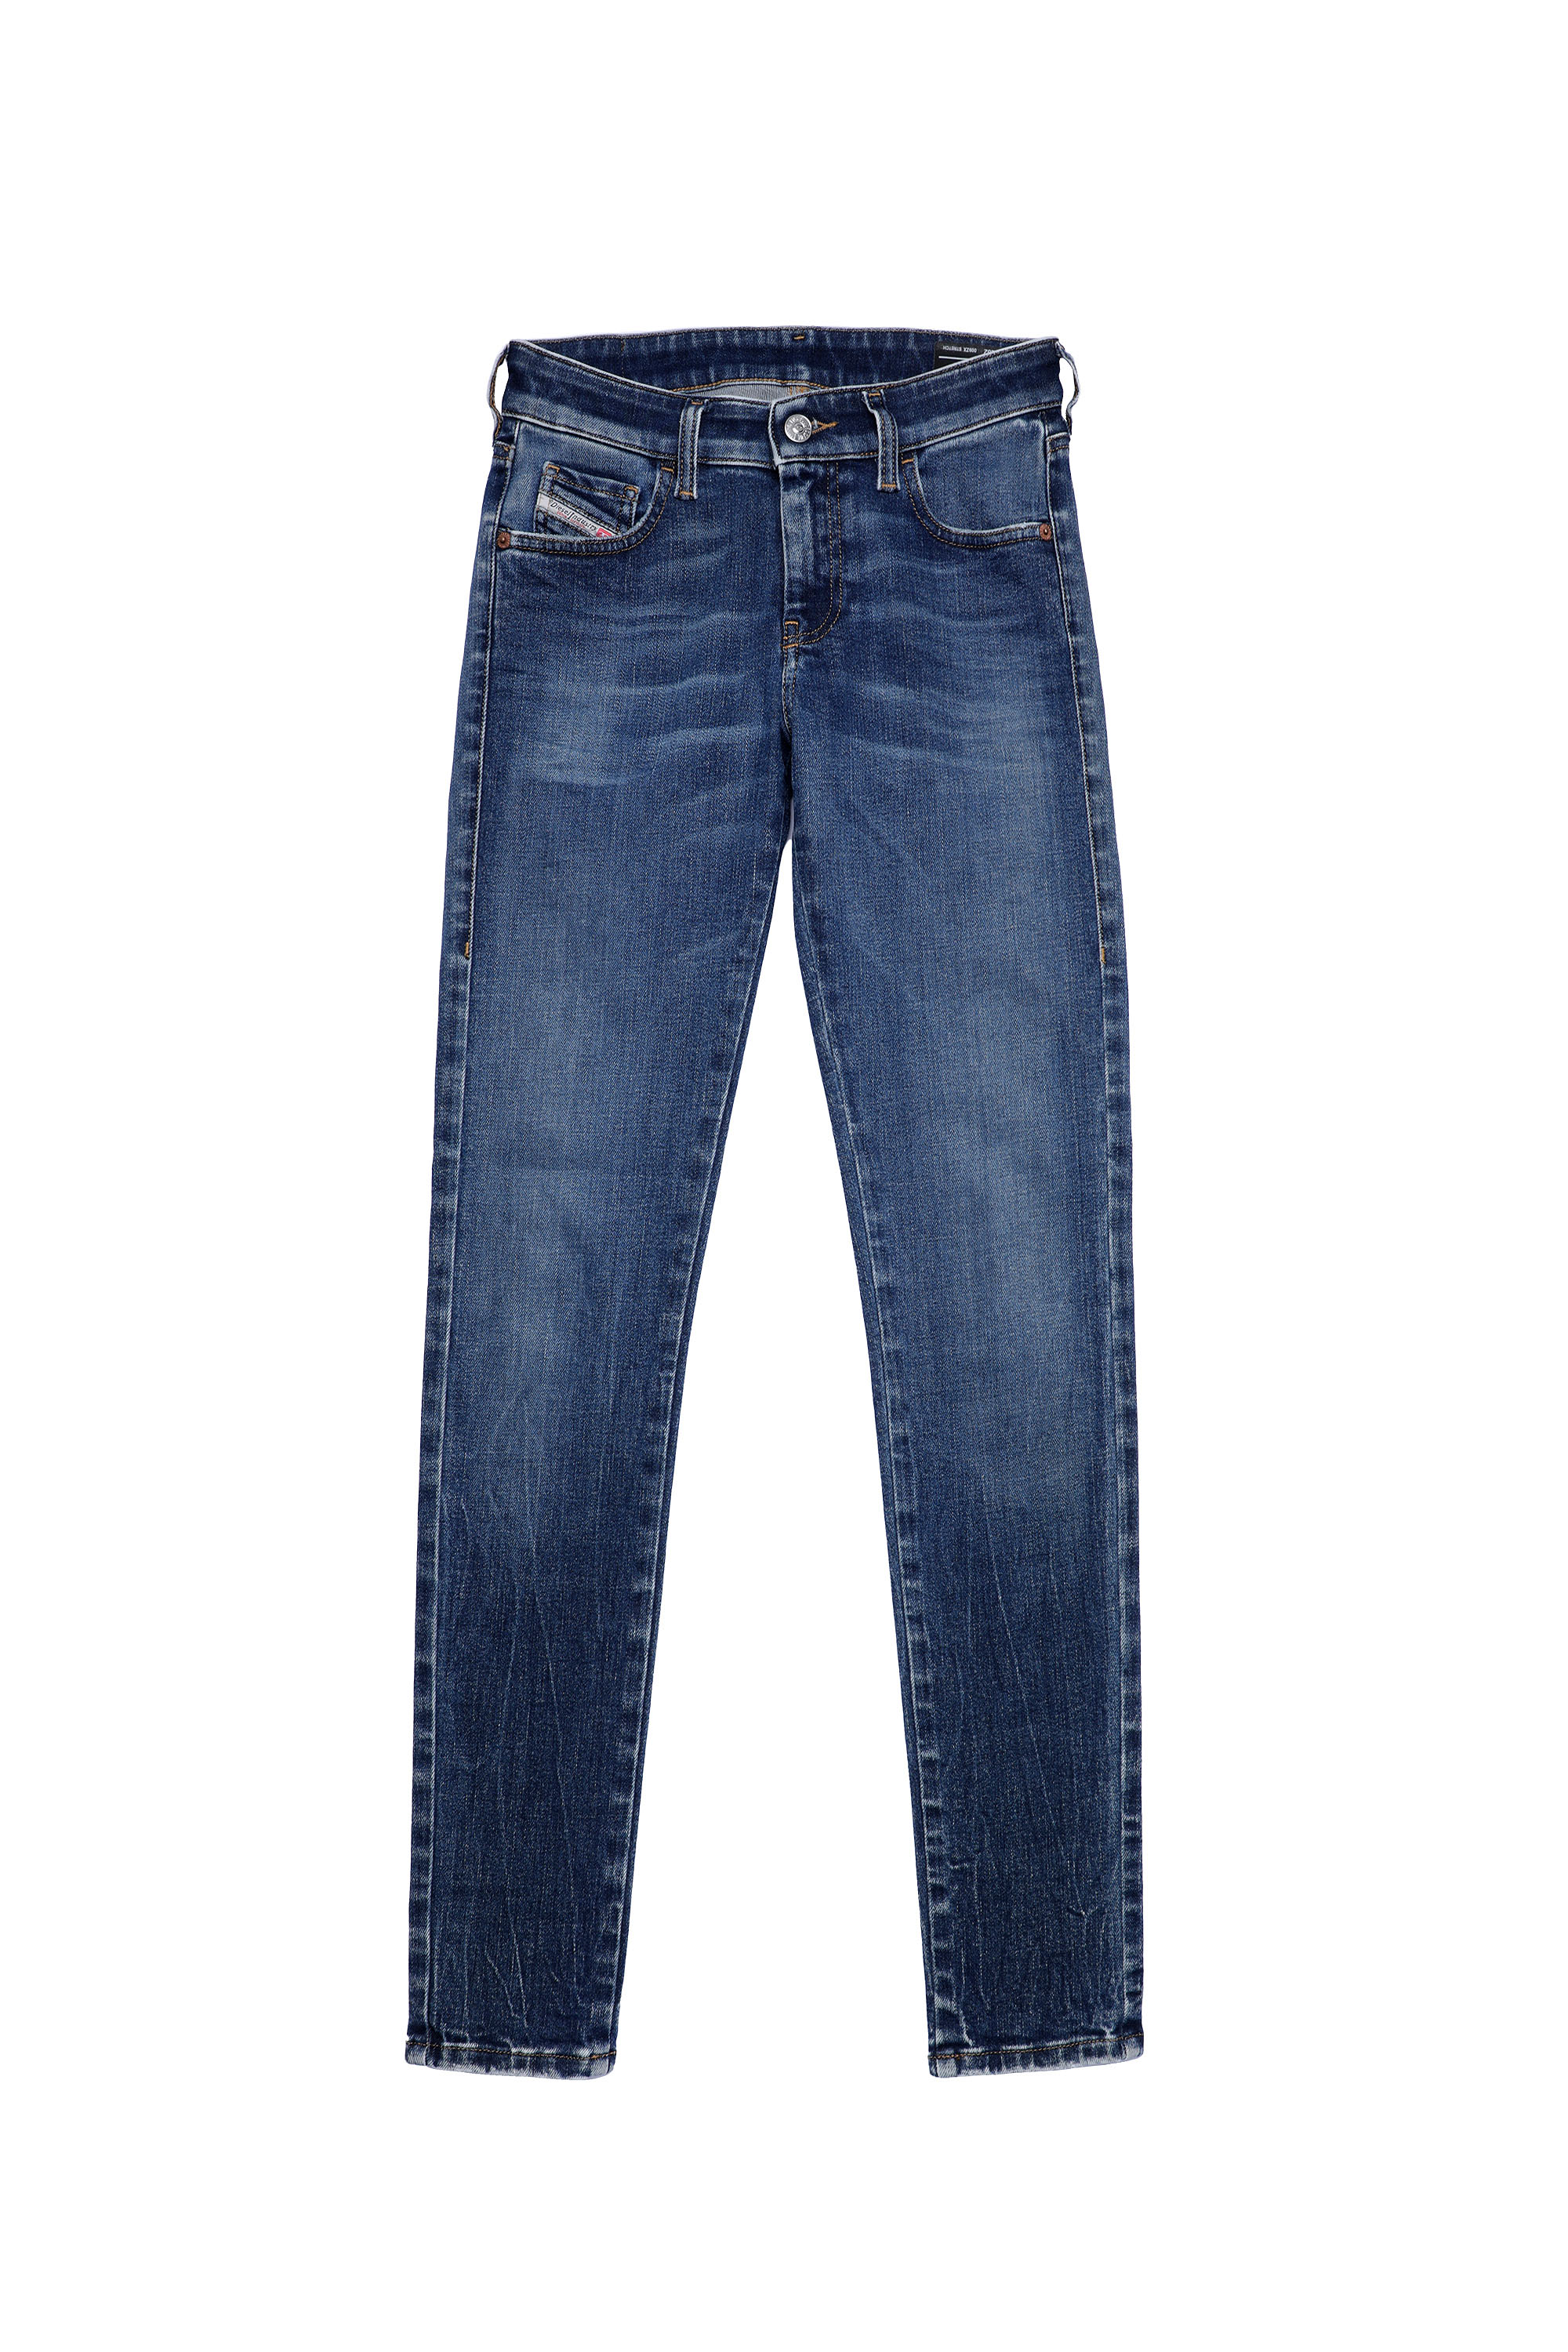 Diesel - 2018 SLANDY-LOW 009ZX Super skinny Jeans,  - Image 6